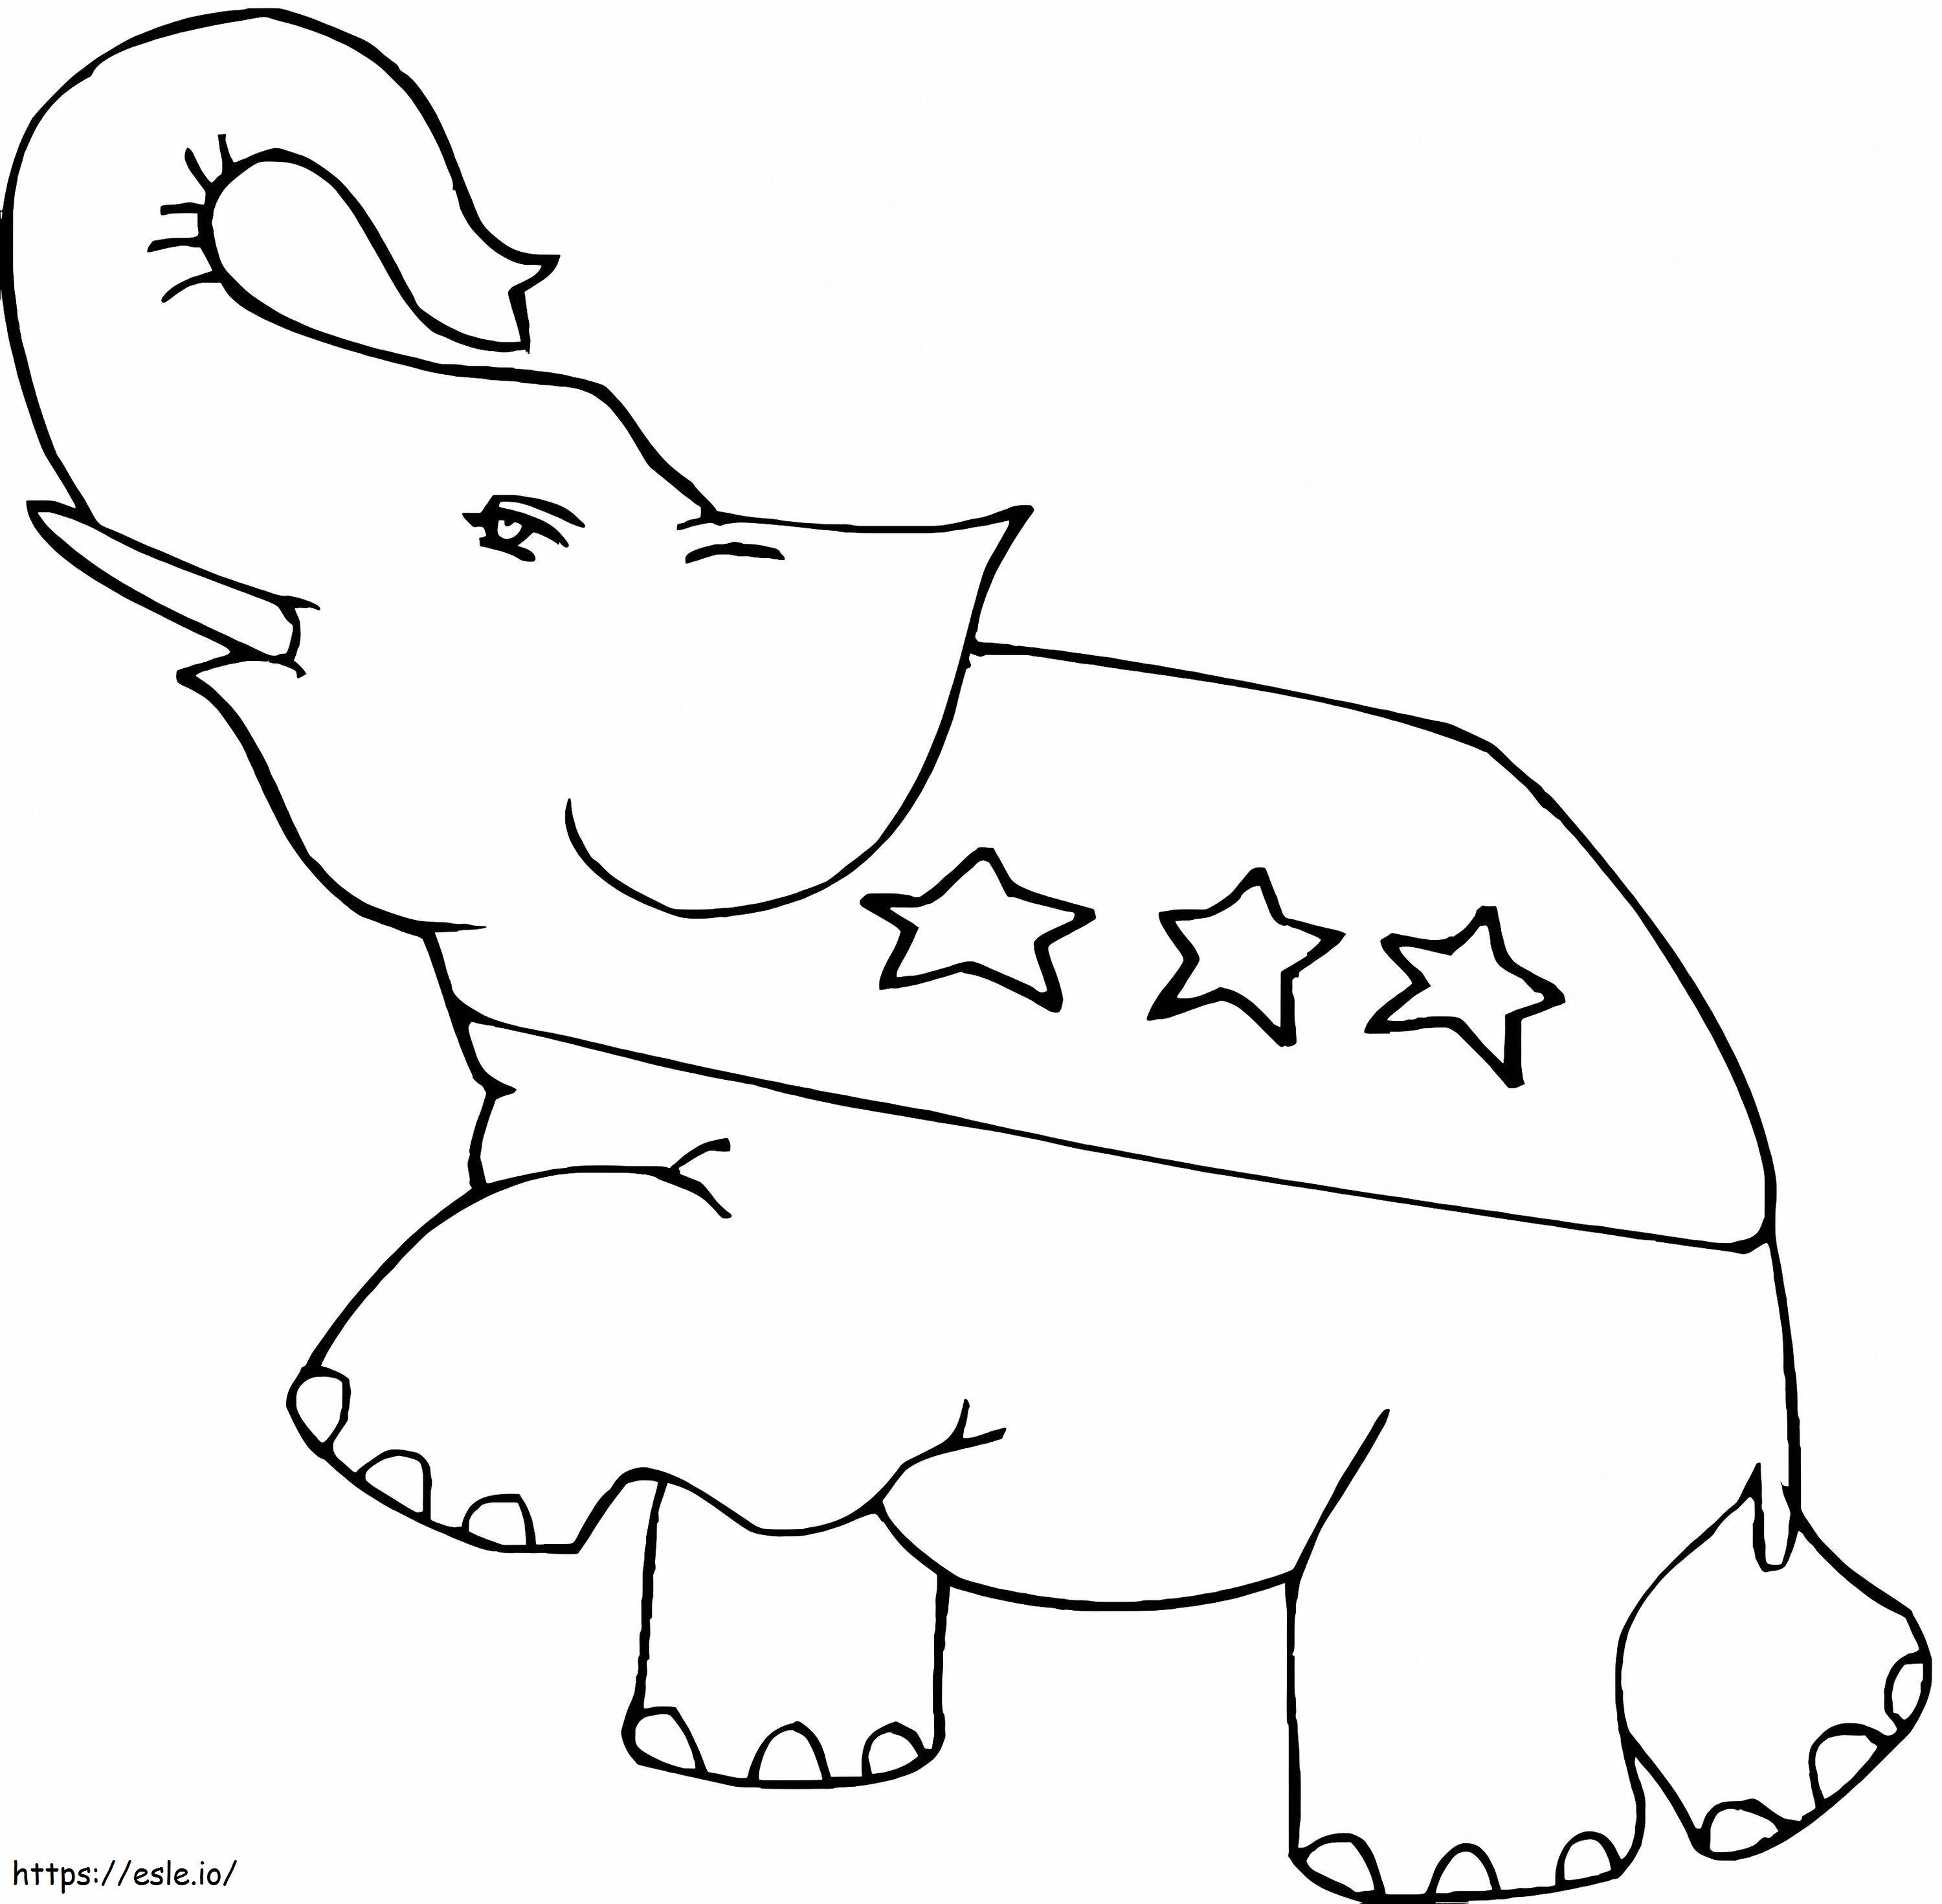 Republikanischer Elefant 1 ausmalbilder